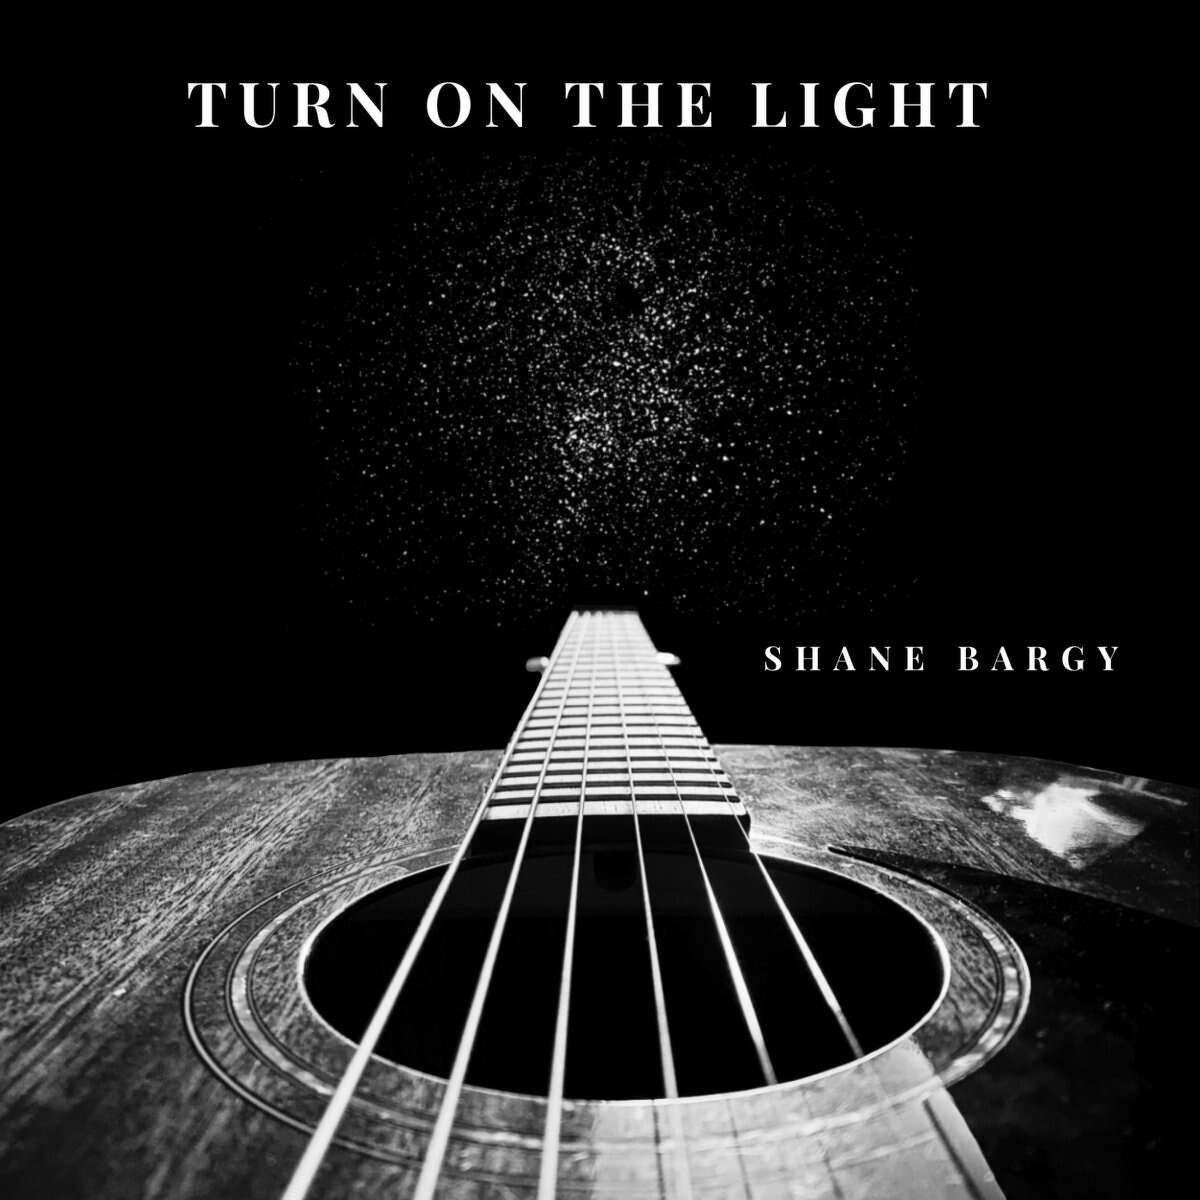 Shane Bargy “Turn on the Light”